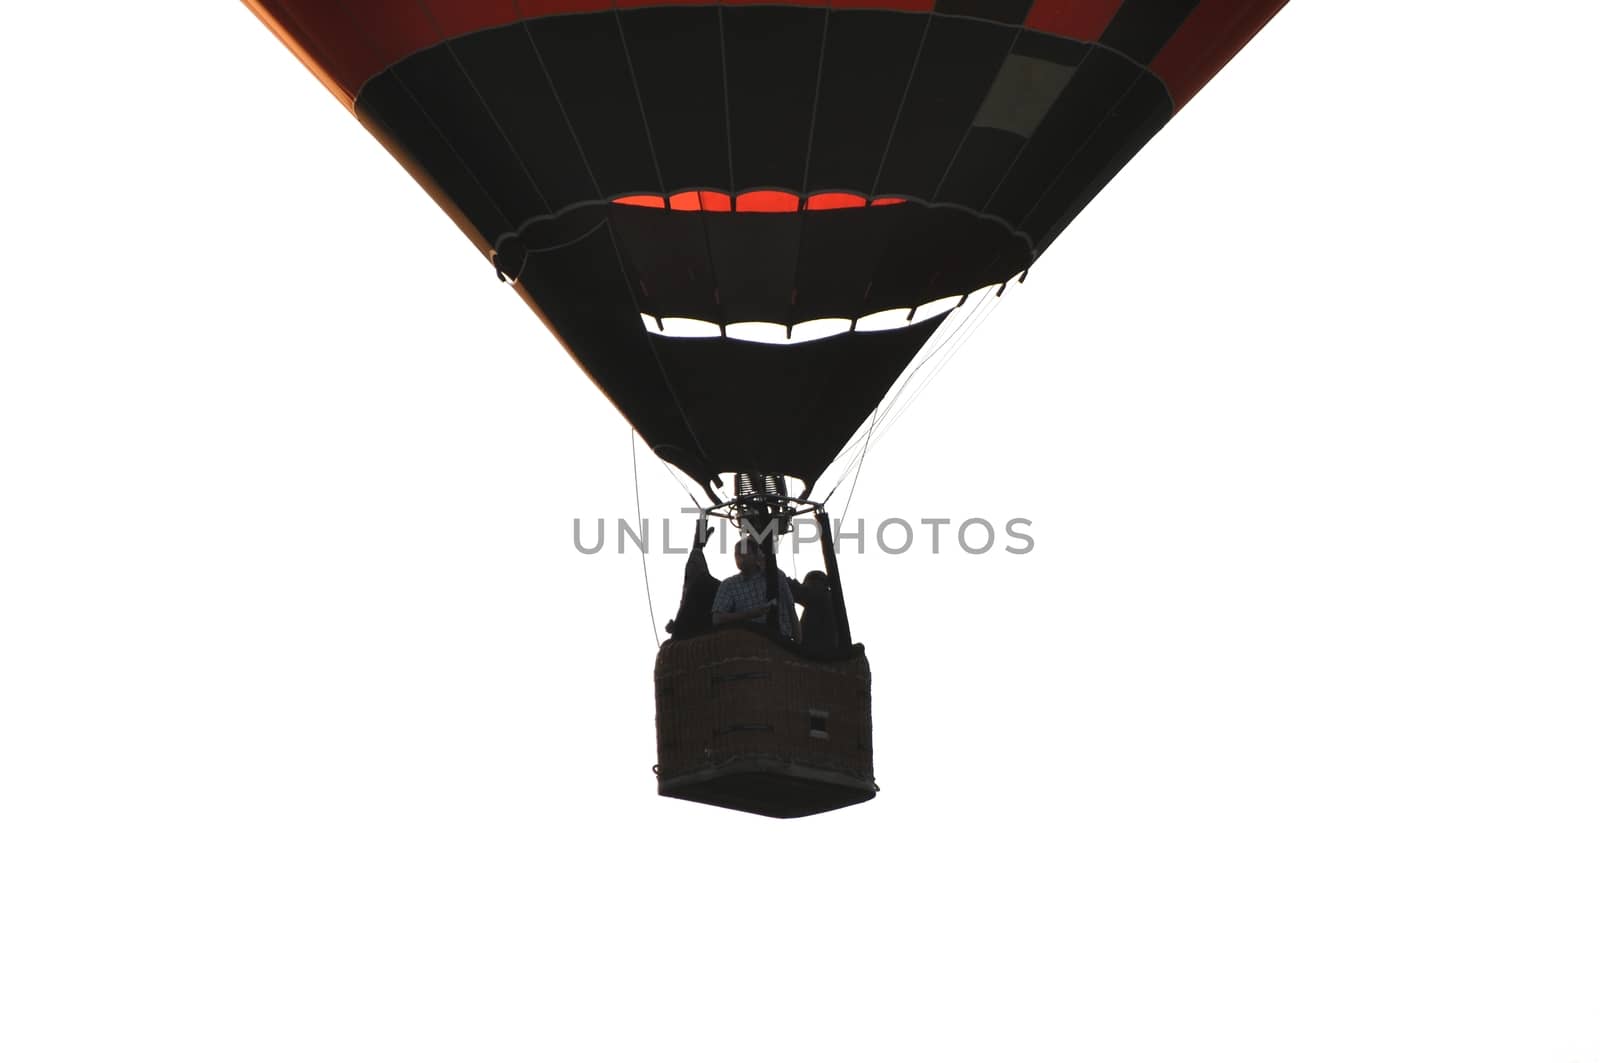 Silhouette of the gondola of a balloon